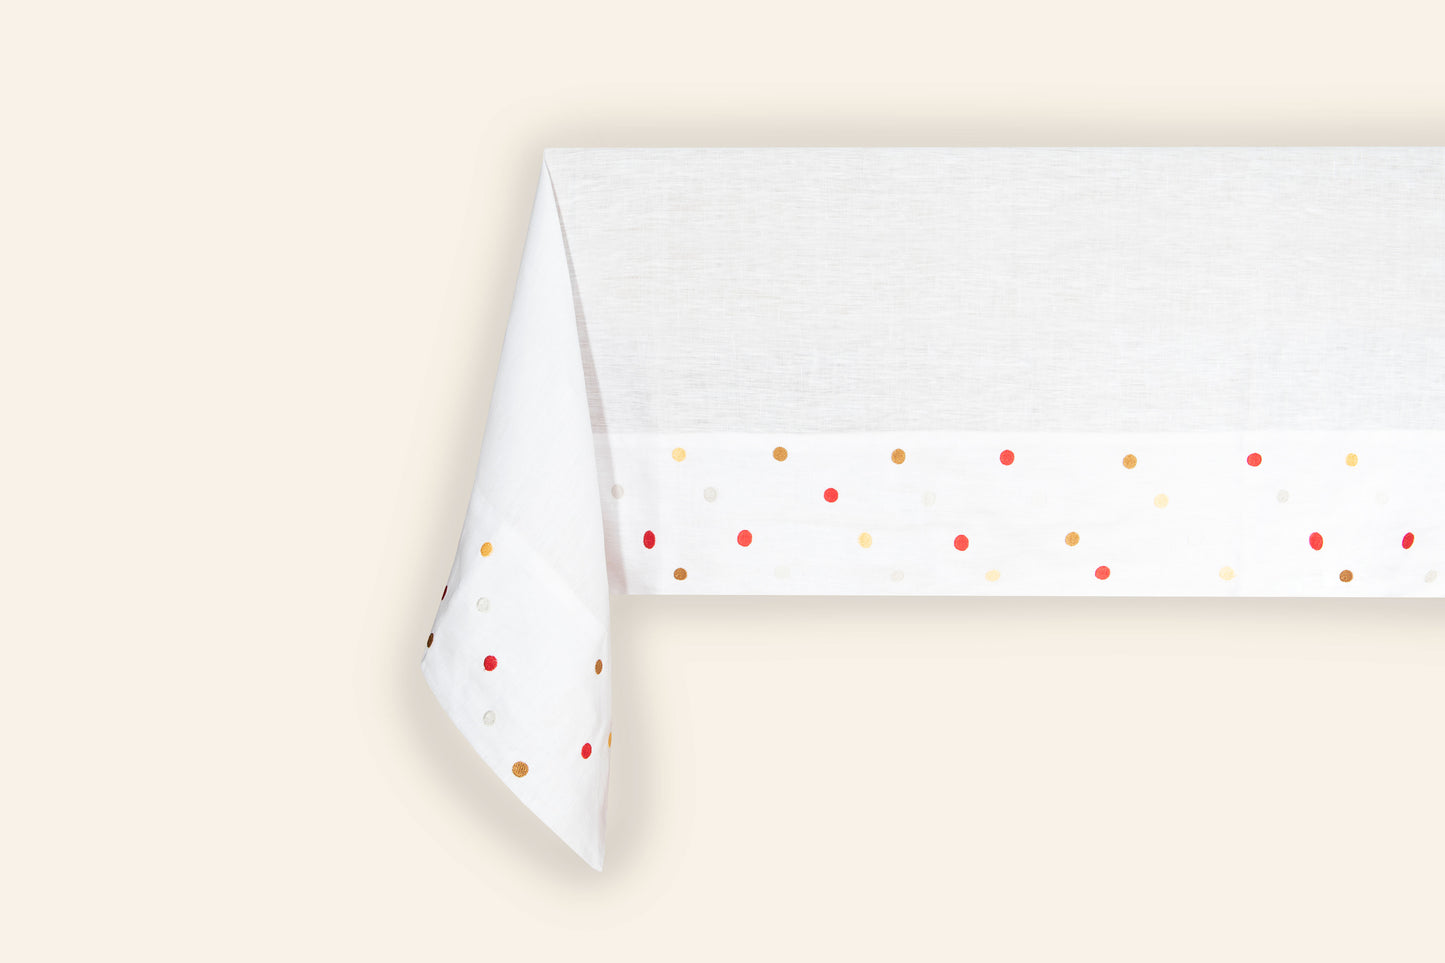 Polka Dot Tablecloth